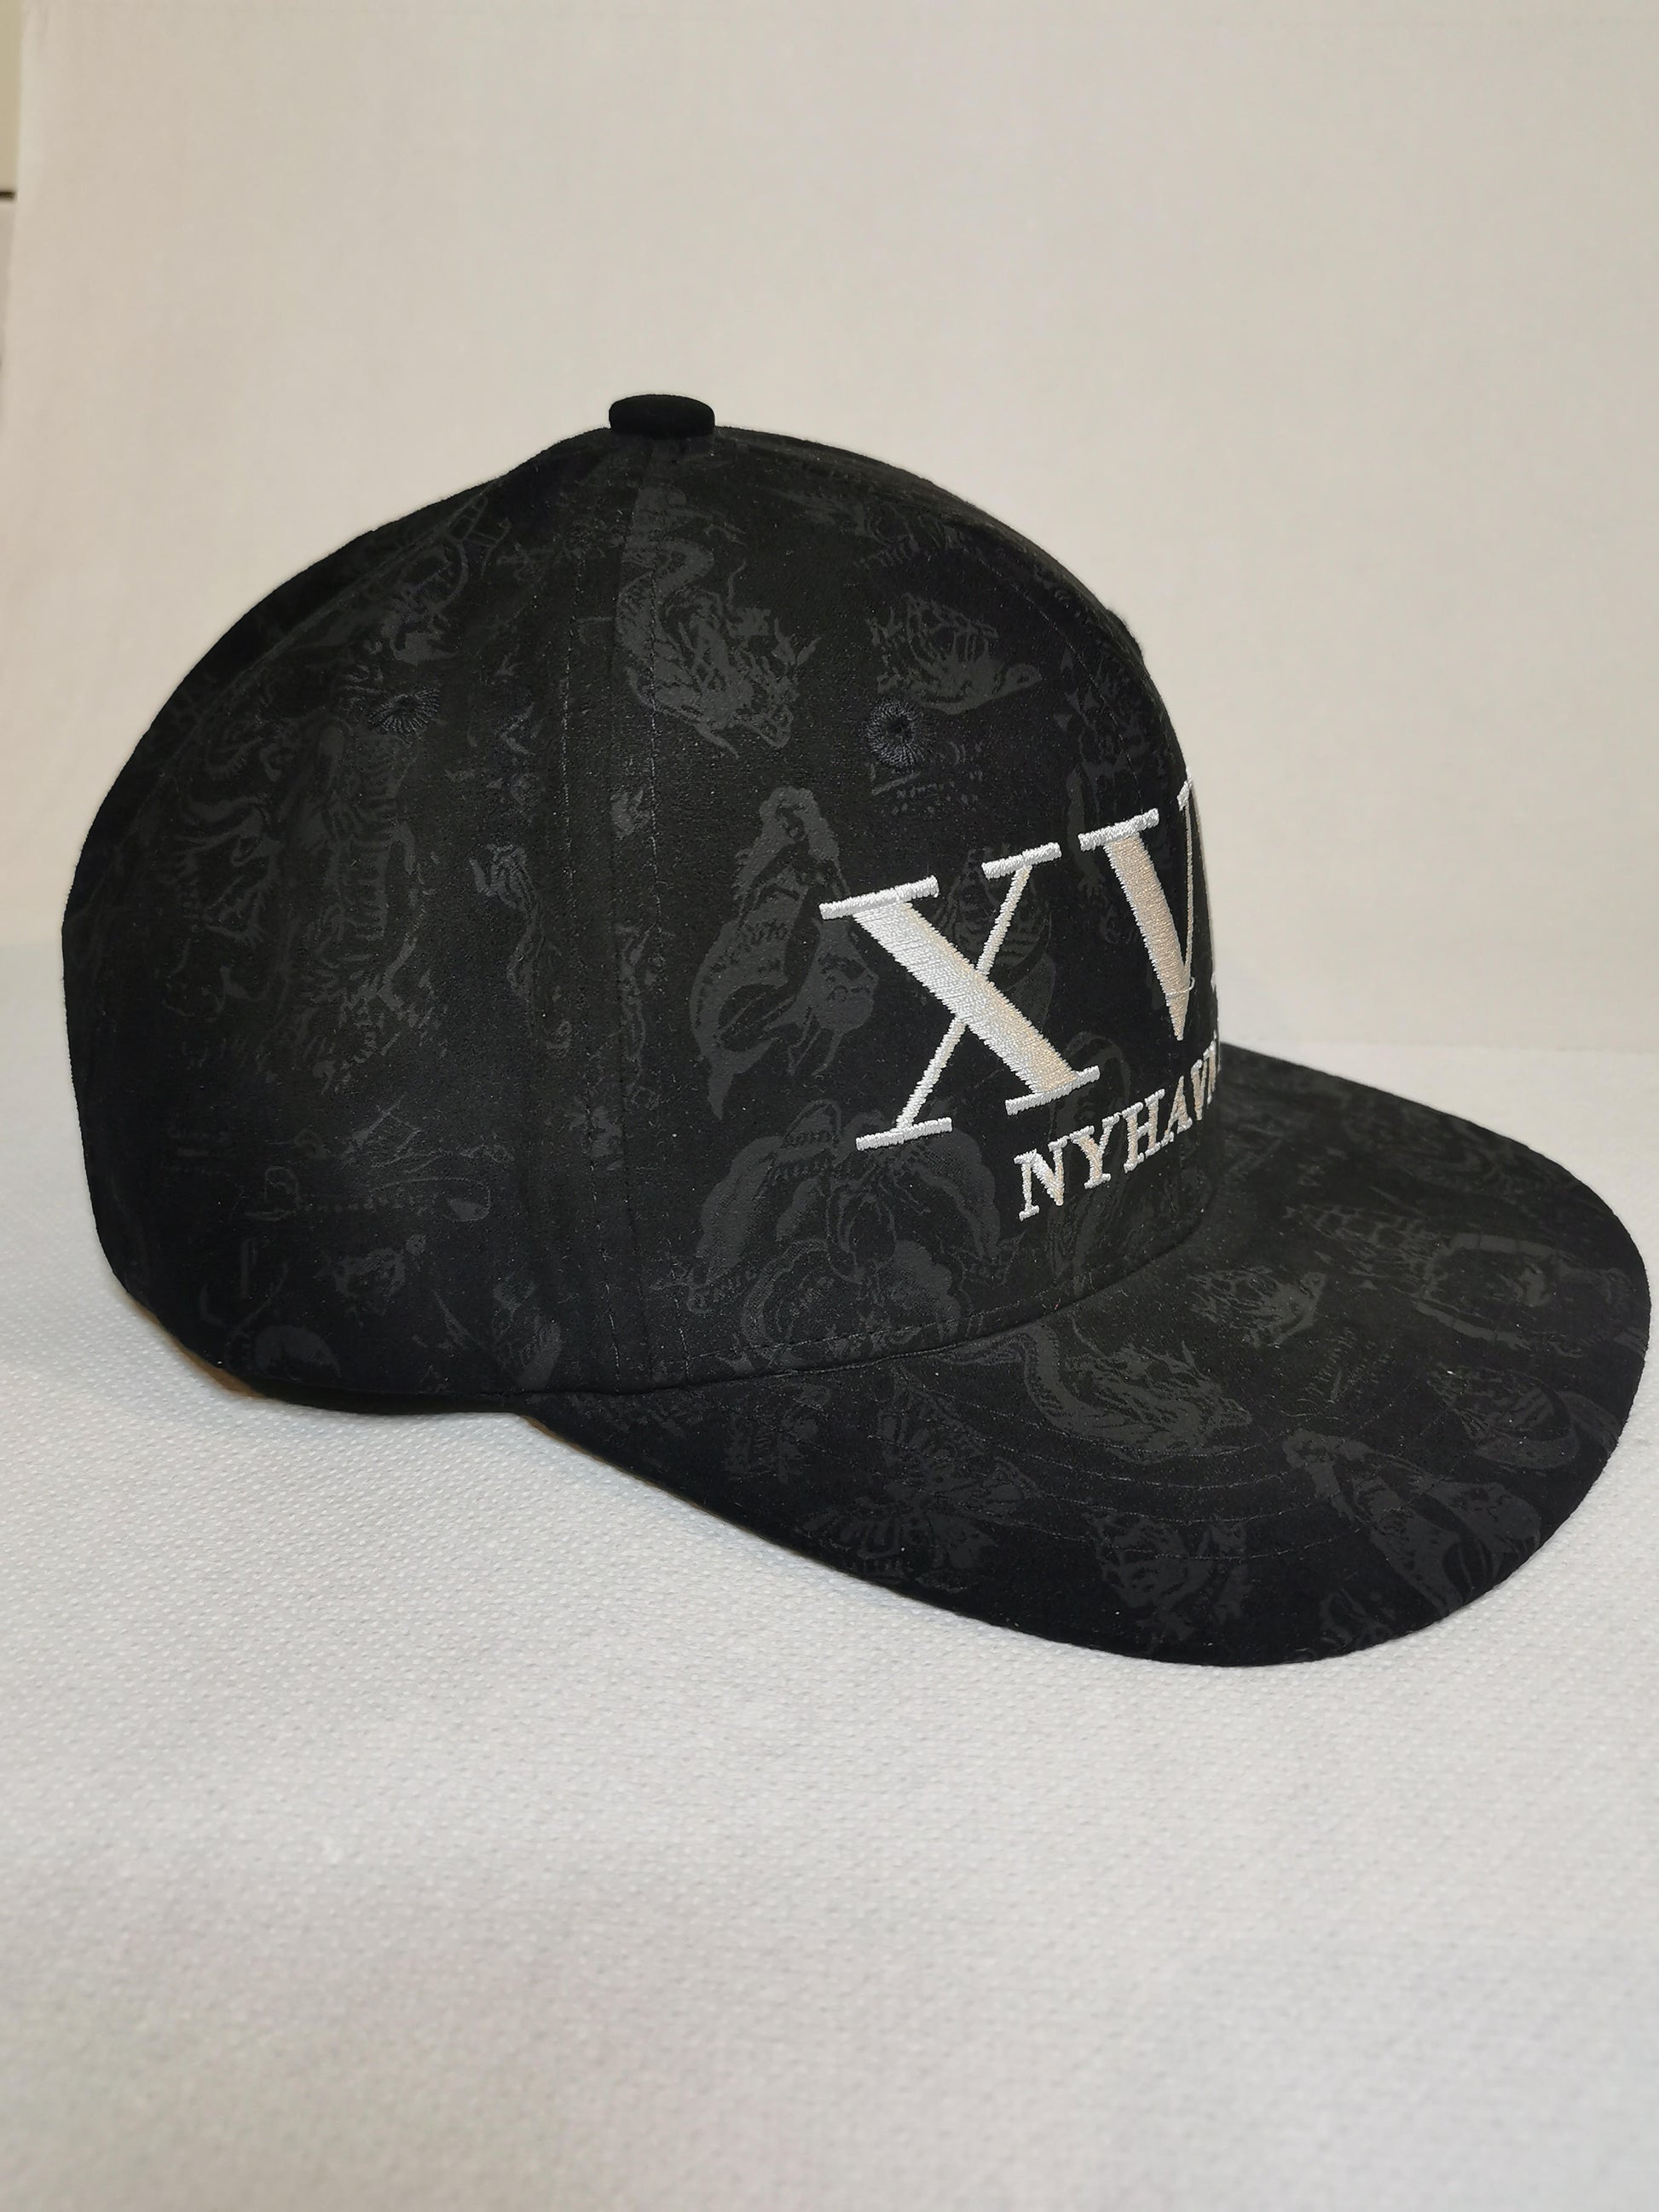 Nyhavn 17 cap - Black cap with white XVII text side